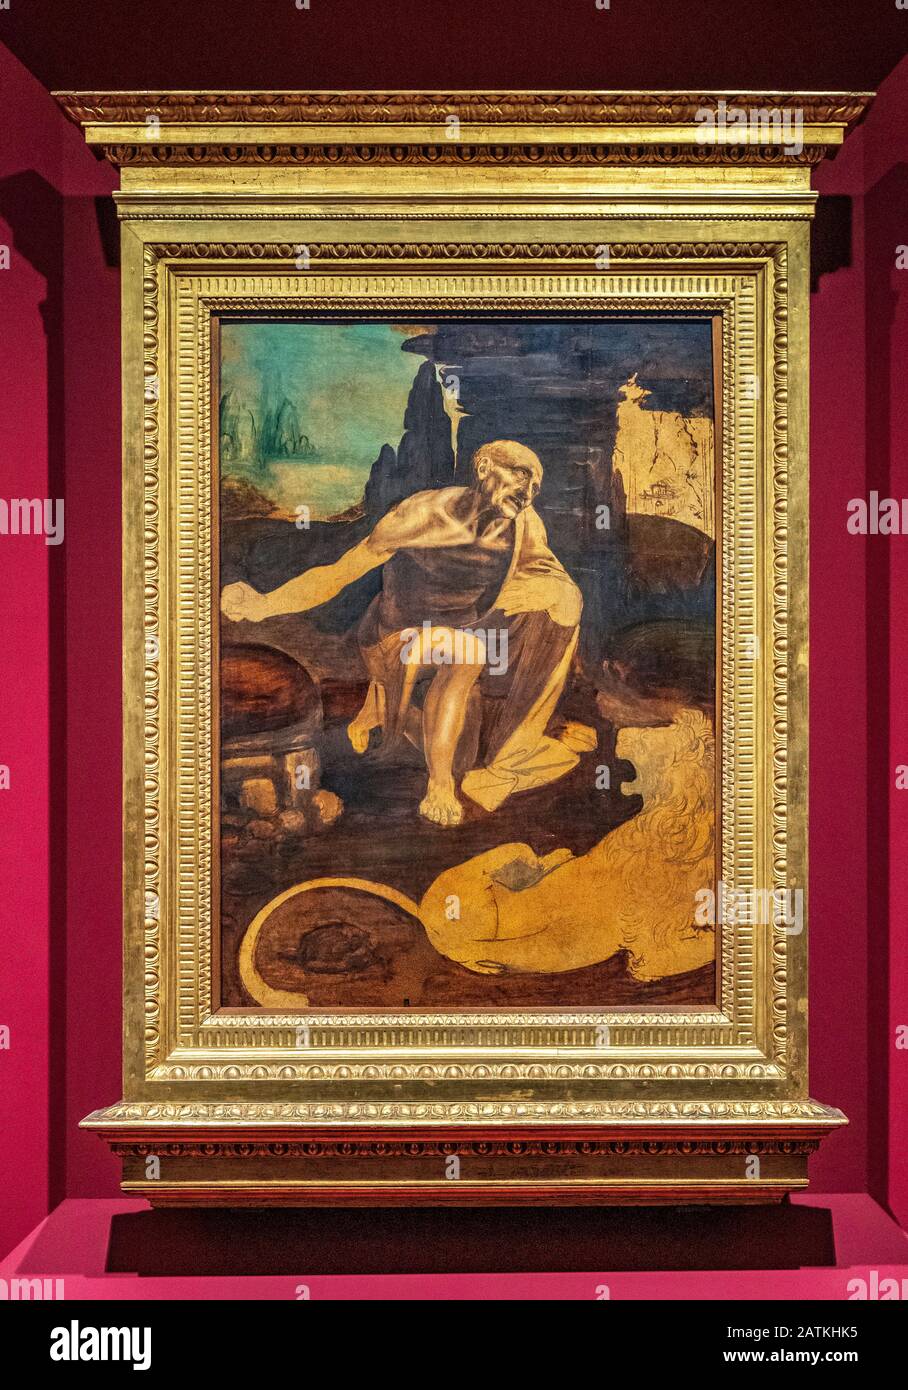 ROM, Vatikanstadt/Italien - 2019/06/15: St. Jerome - San Girolamo - Gemälde von Leonardo da Vinci in den Vatikanischen Museen - Musei Vaticani Stockfoto